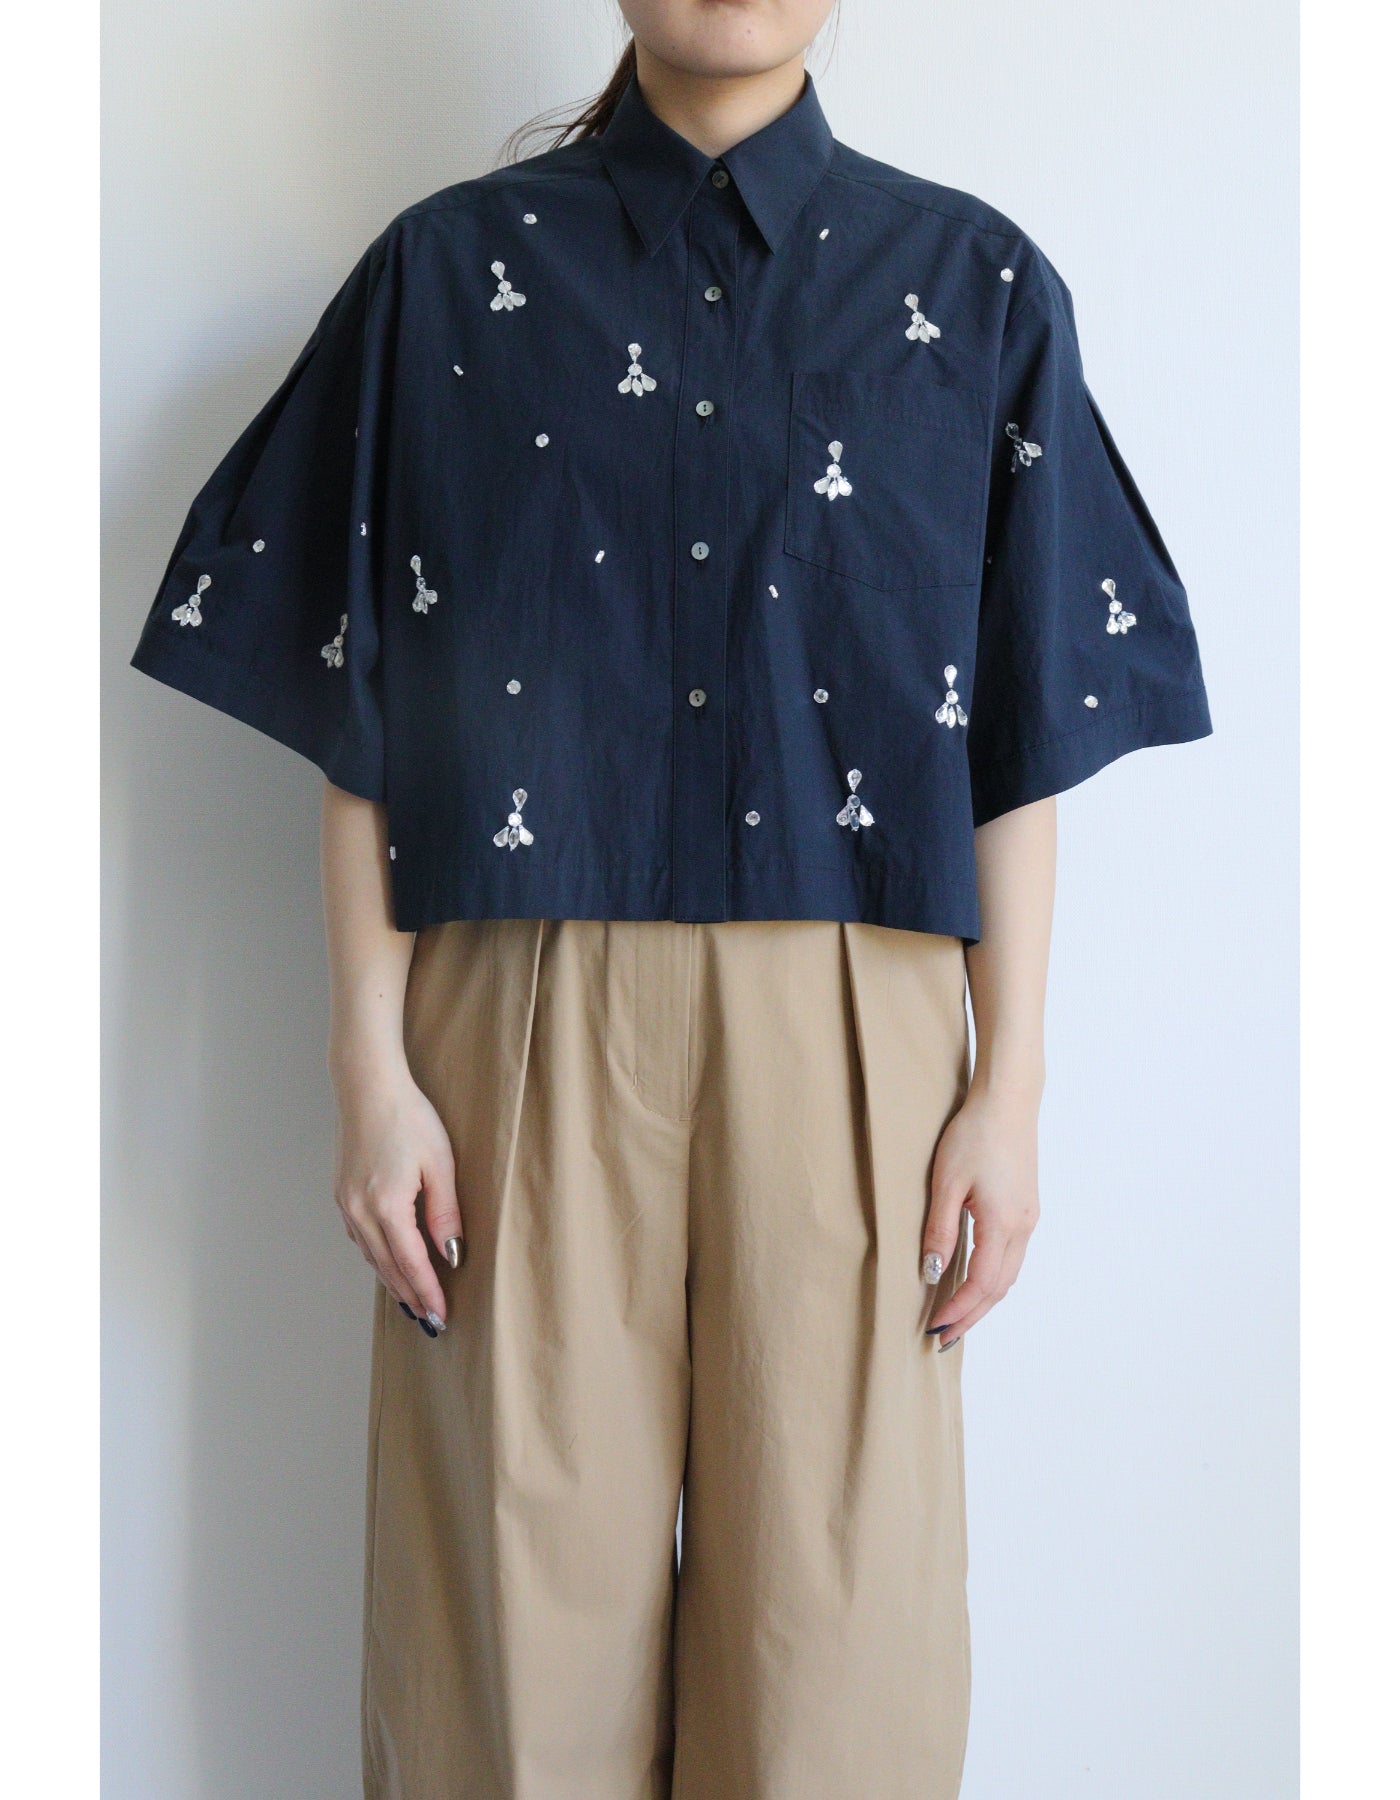 【ACUTA】ビジューショートシャツ